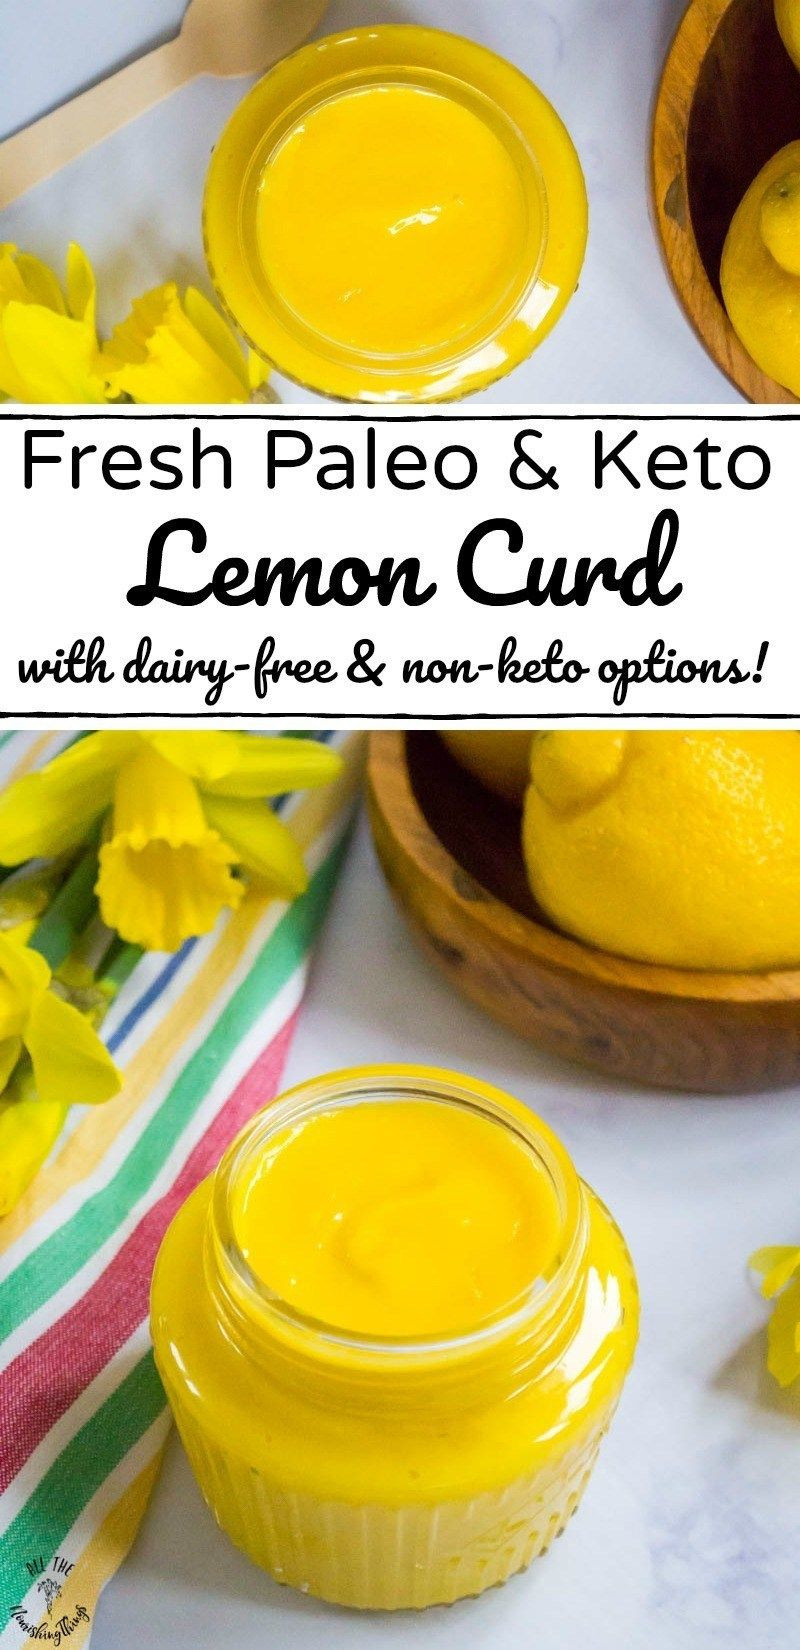 Non Dairy Keto Recipes
 Low Carb Keto Lemon Curd with dairy free & non keto